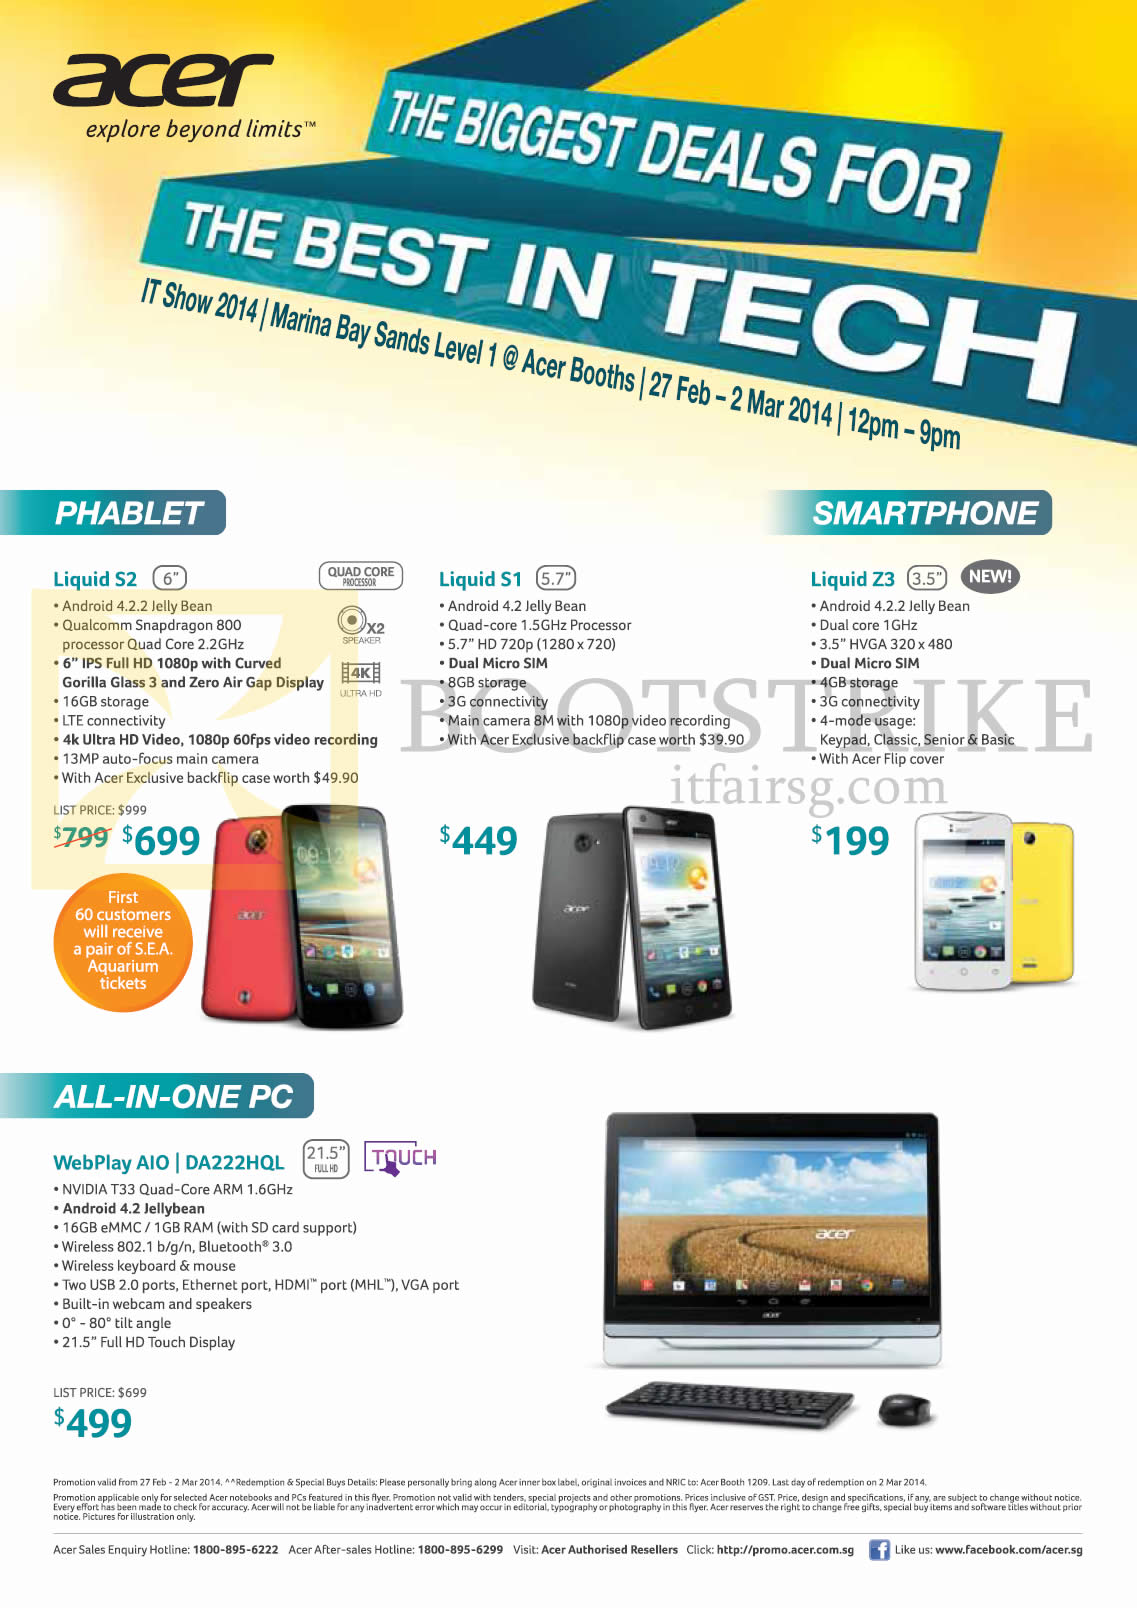 IT SHOW 2014 price list image brochure of Acer Tablets, Smartphone, AIO Desktop PC, Liquid S2, S1, Z3, WebPlay DA222HQL